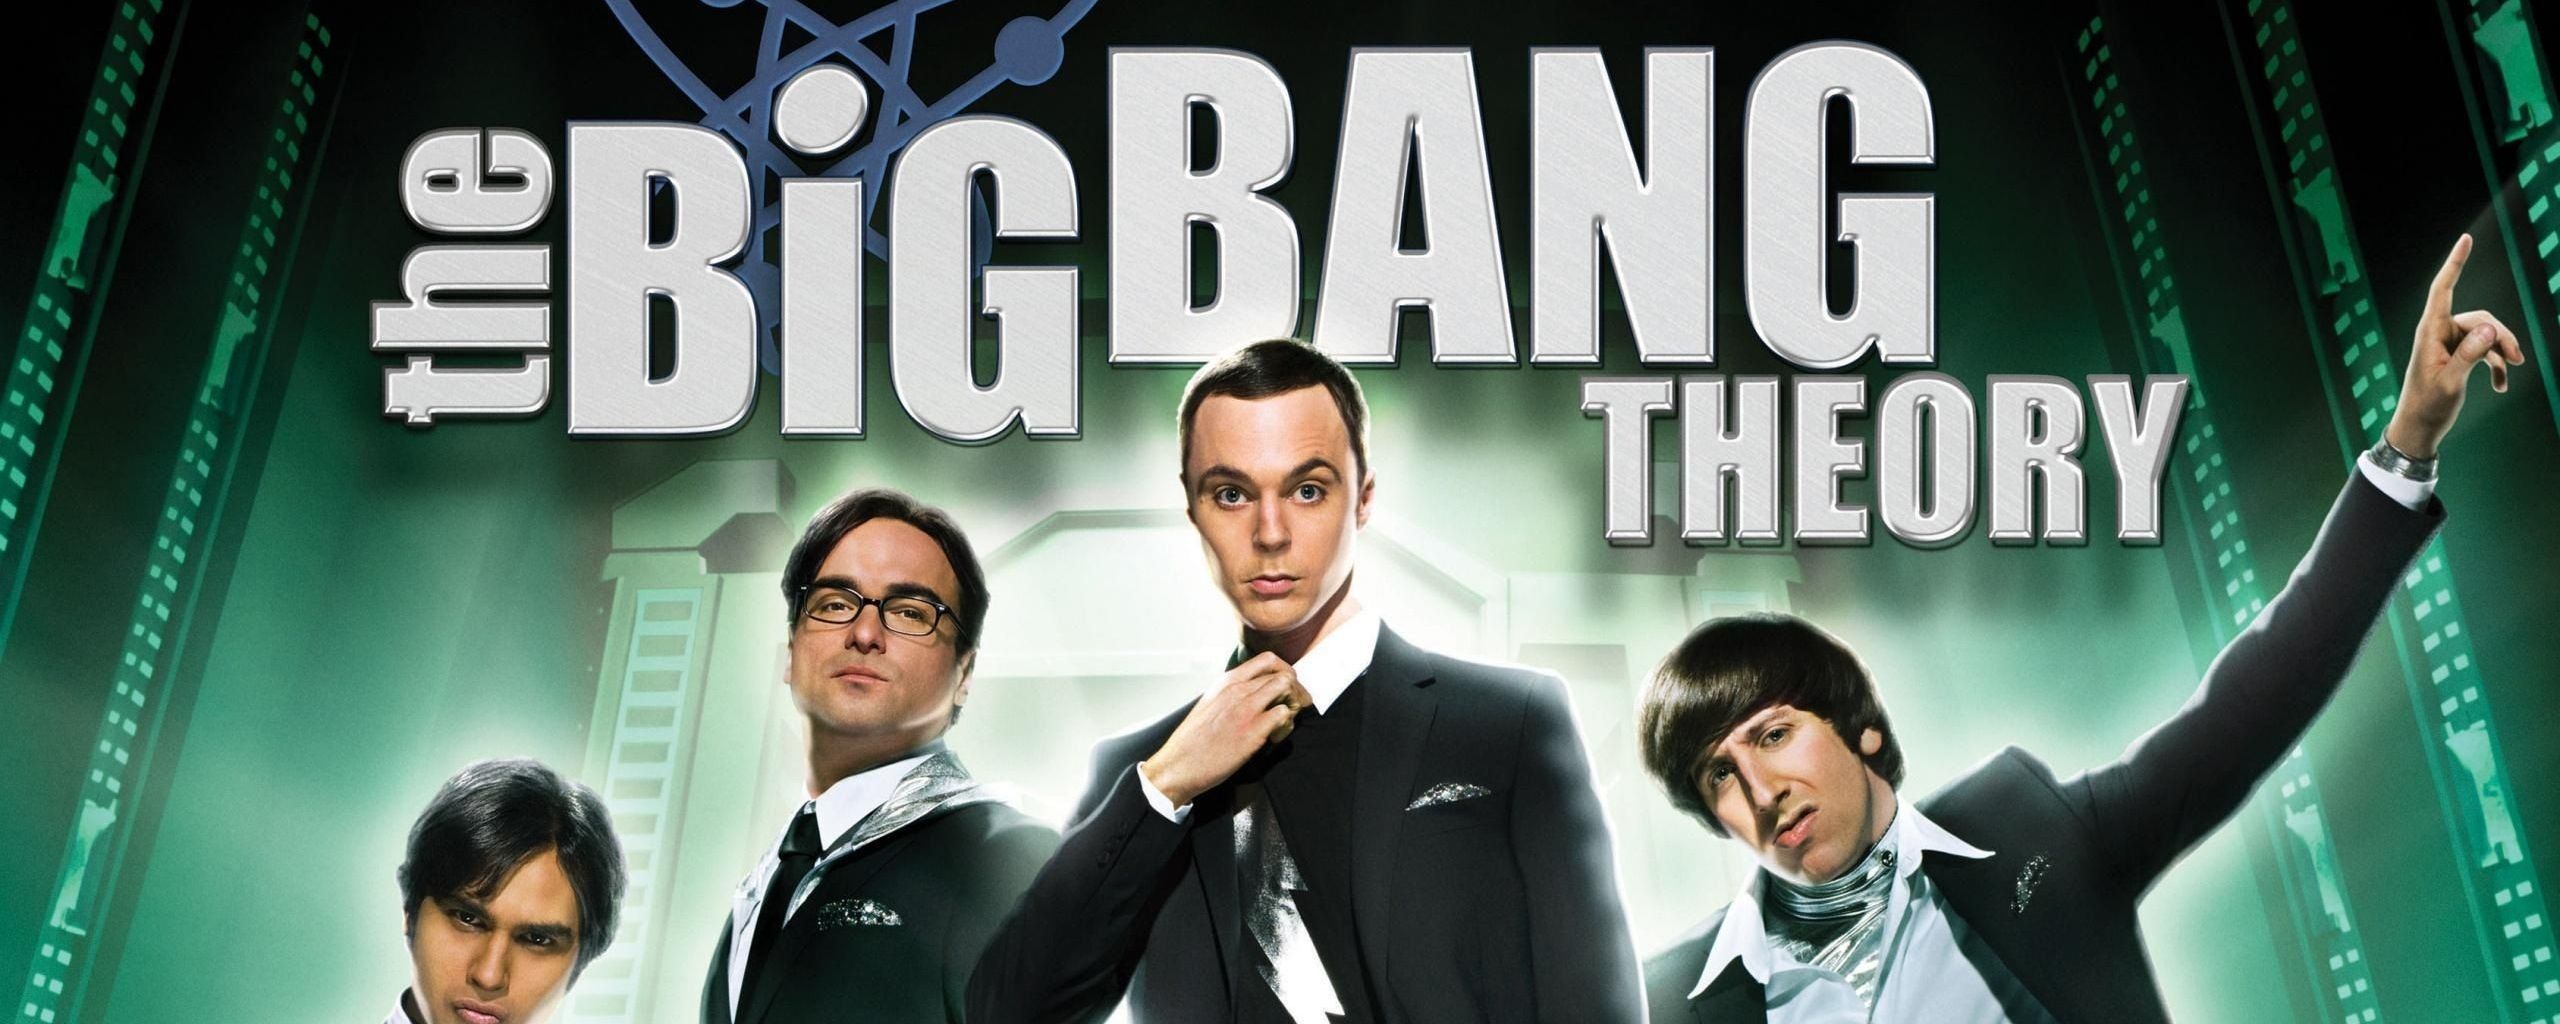 The Big Bang Theory Wallpapers Widescreen